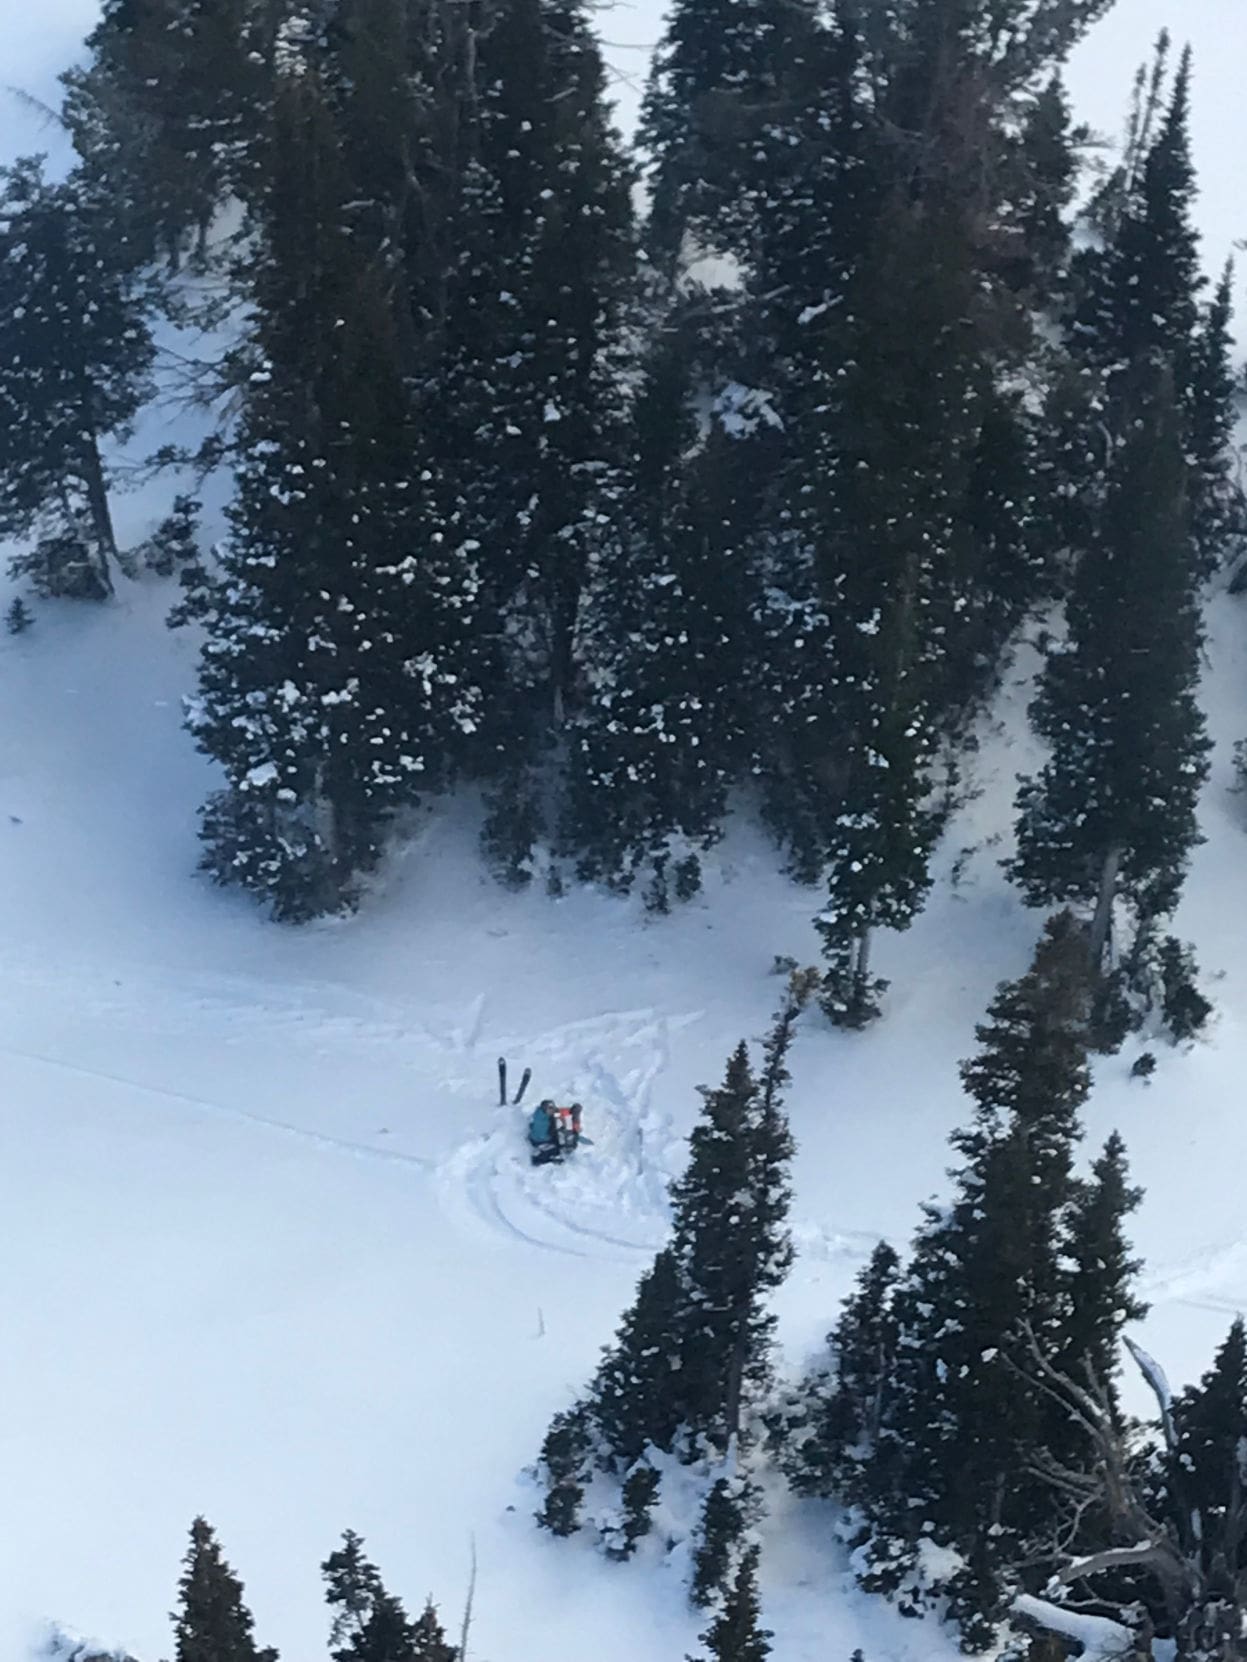 teton conty, search and rescue, skier hurt